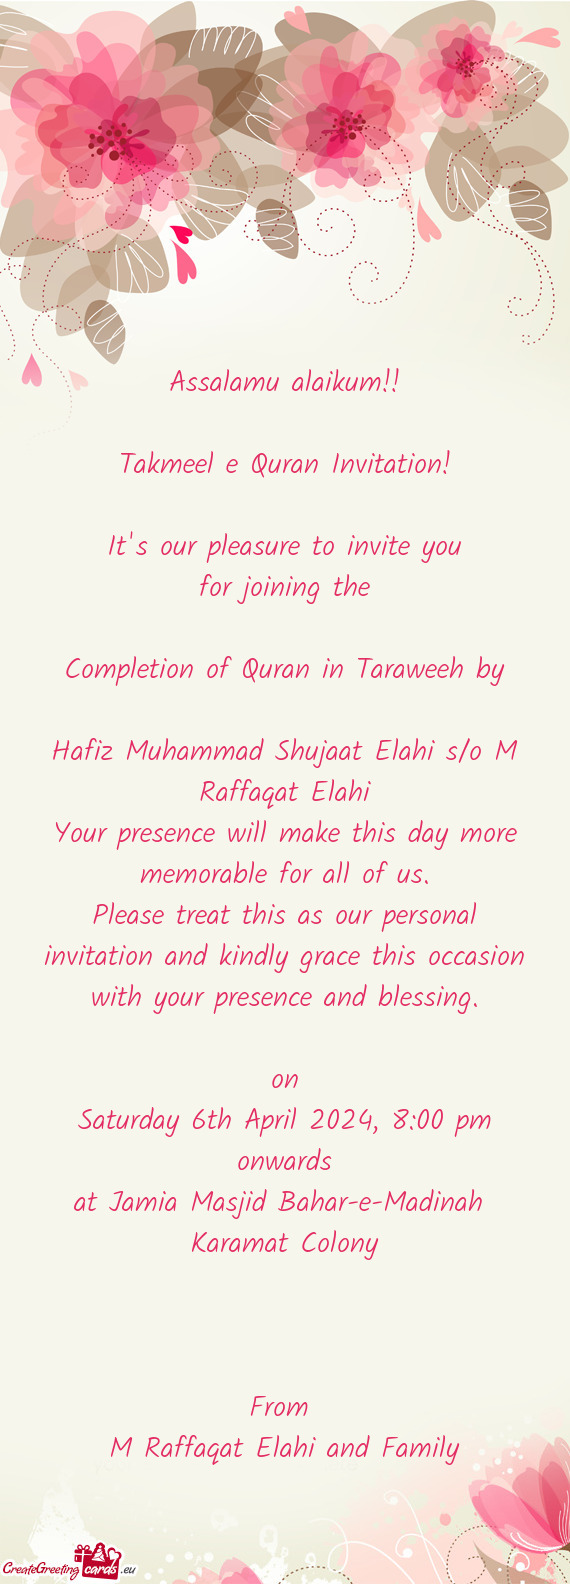 Hafiz Muhammad Shujaat Elahi s/o M Raffaqat Elahi